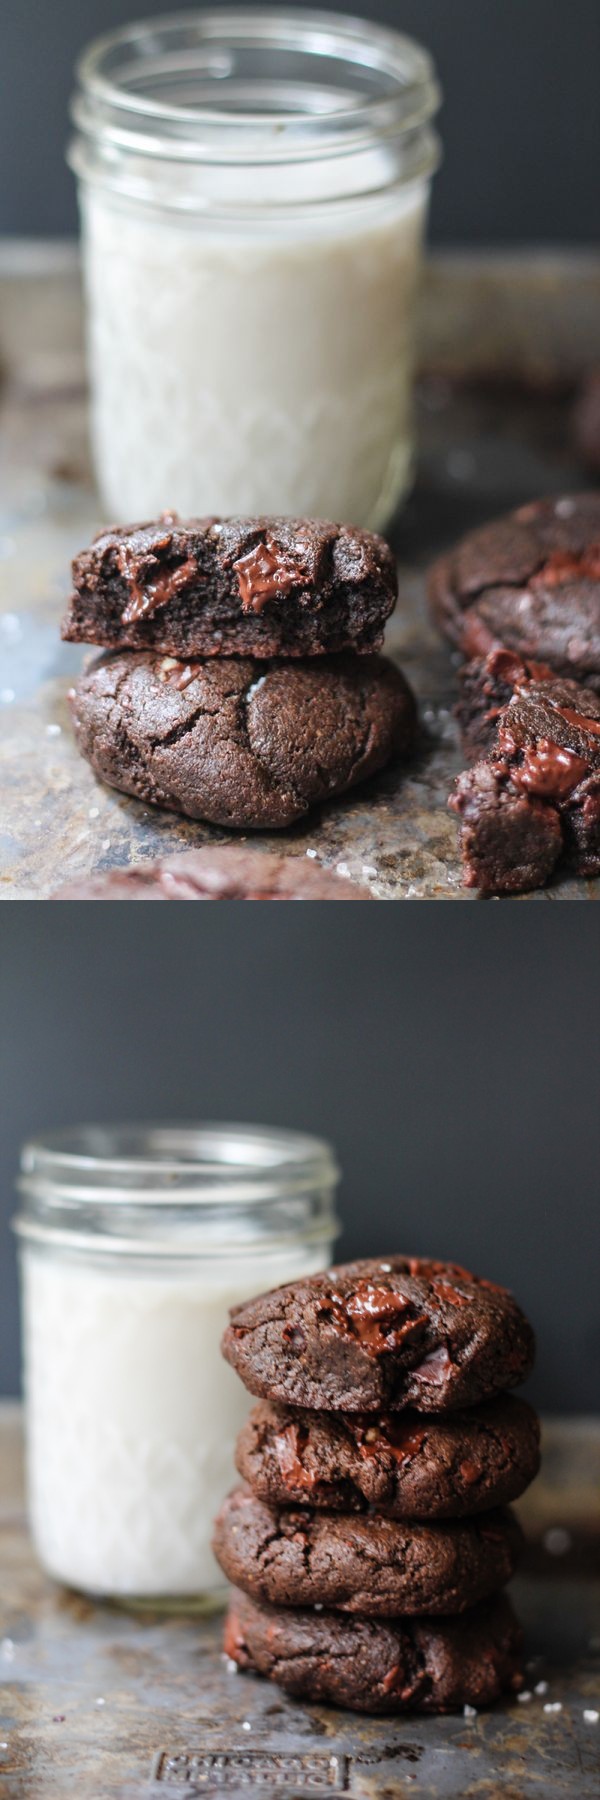 Flourless Double Chocolate Hazelnut Cookies with Sea Salt (grain free, gluten free, paleo